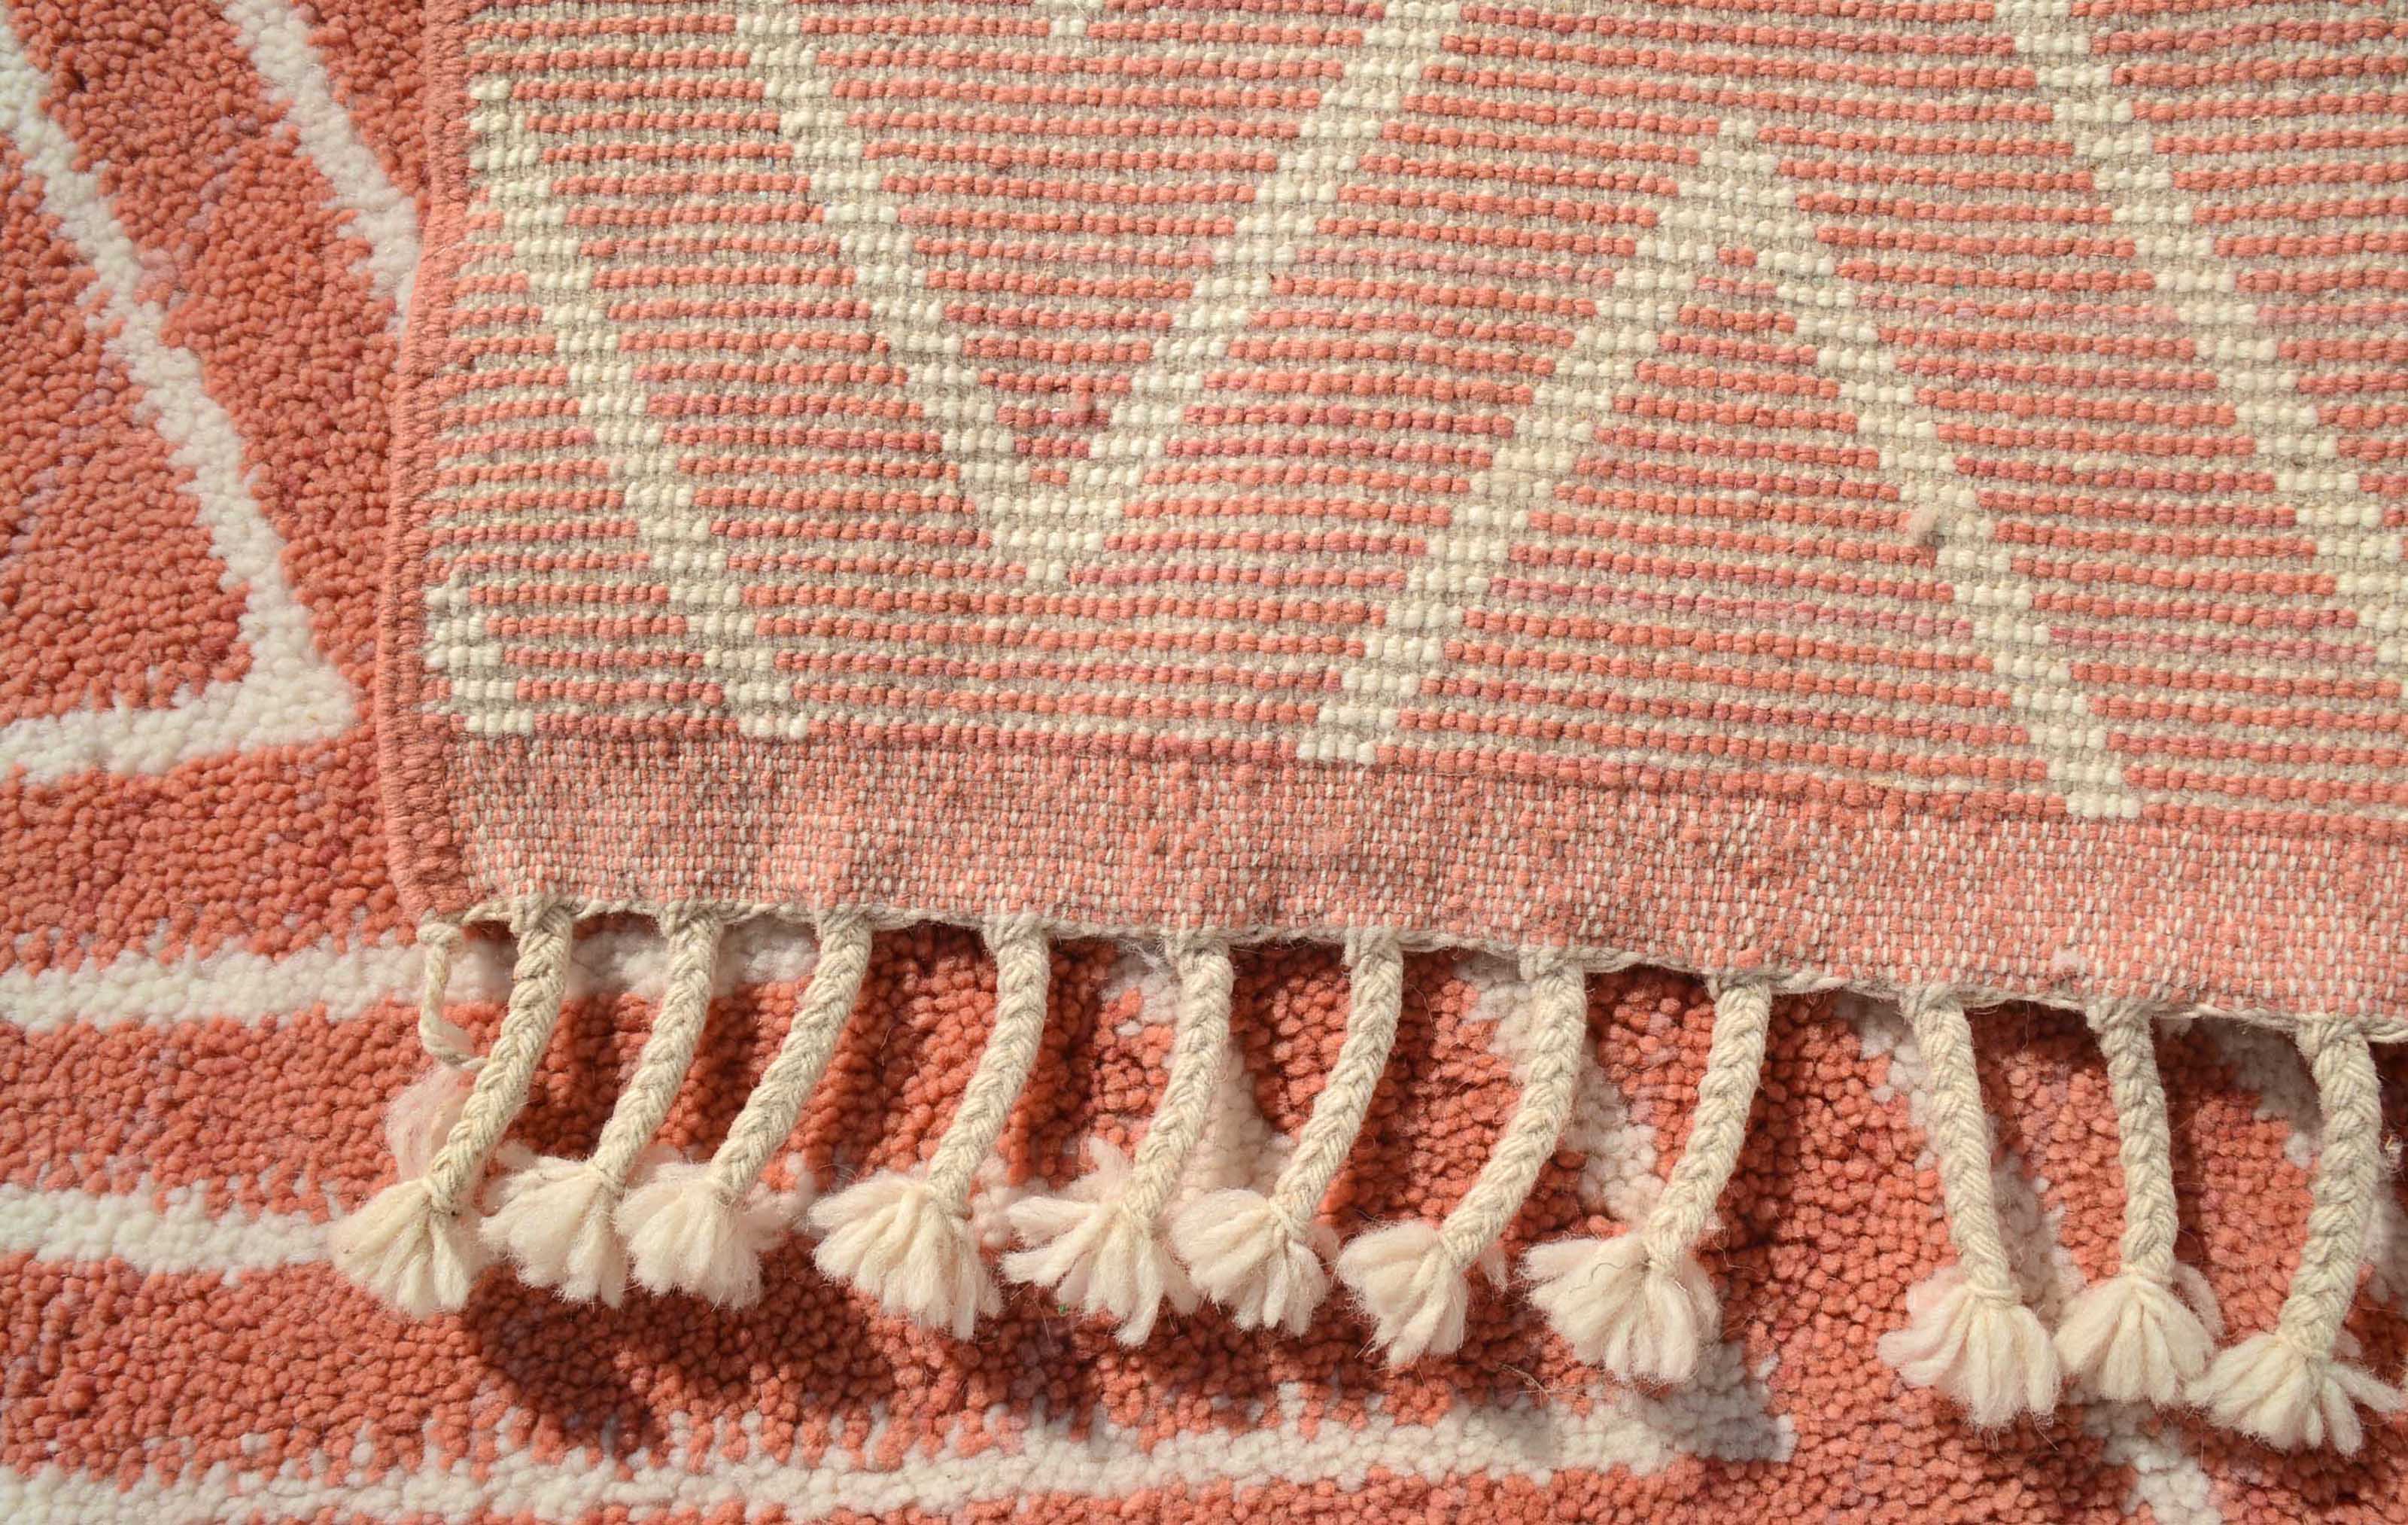 RoseWave - Elegant Pink Zigzag Rug for Chic Décor | Illuminate Collective